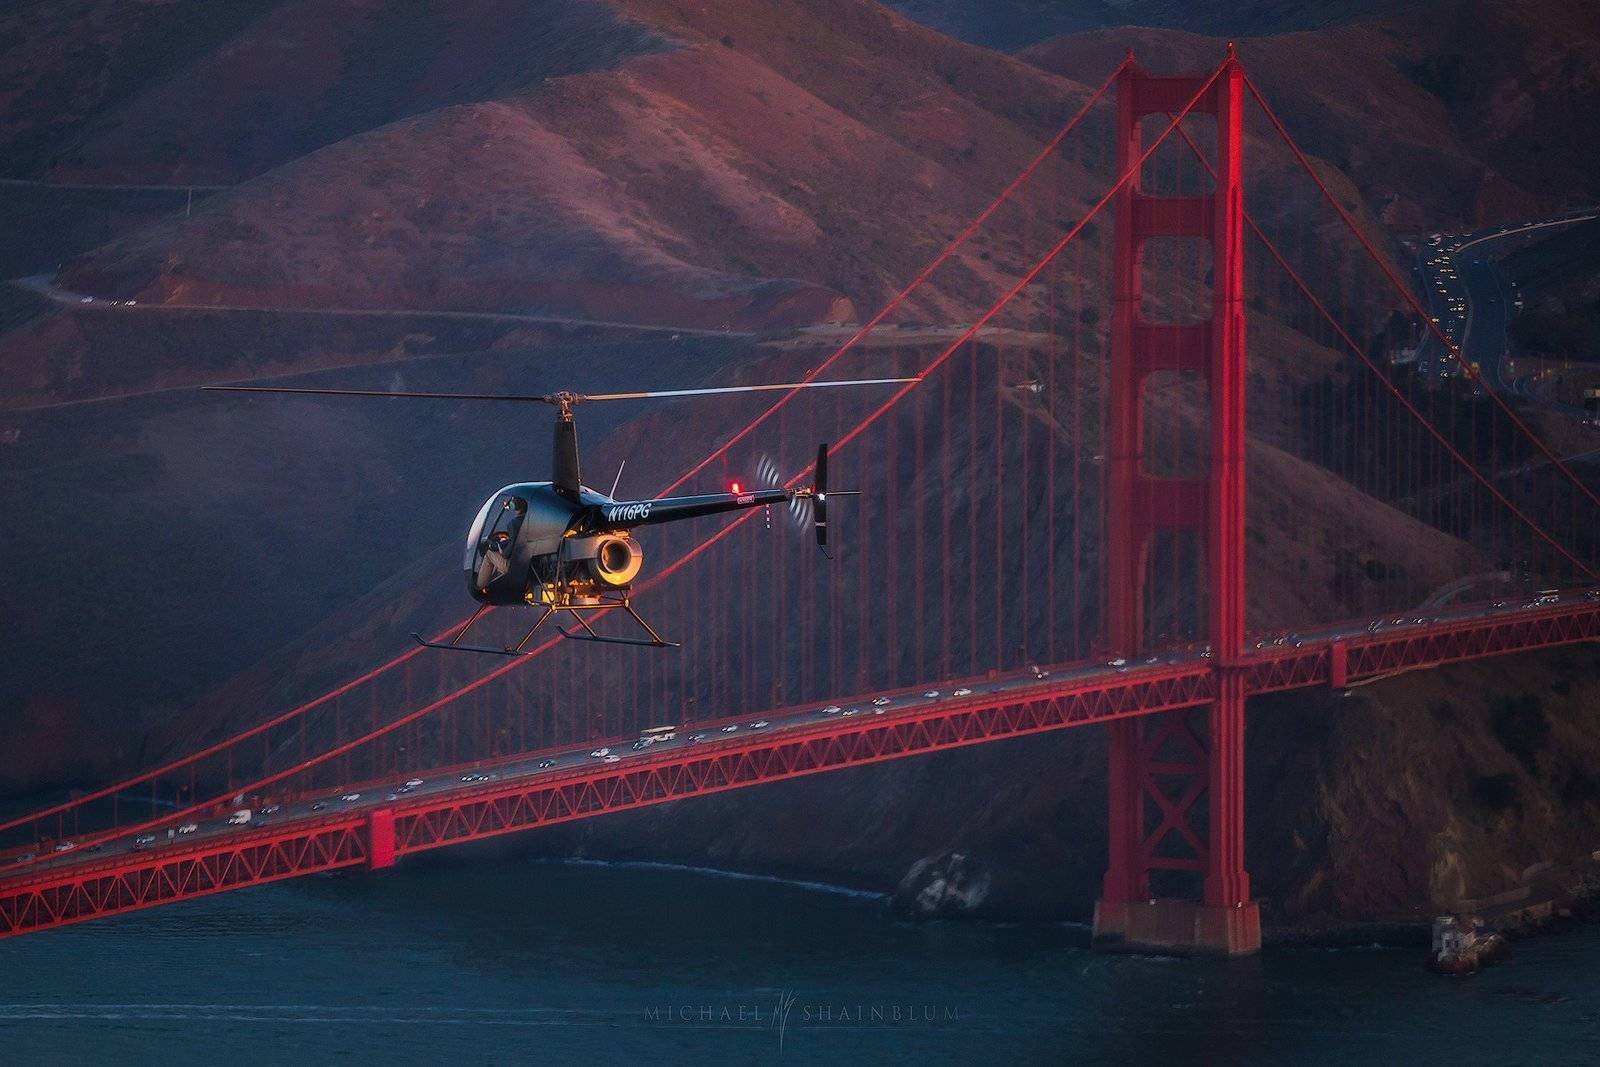 Golden Gate Bridge Aerial, San Francisco